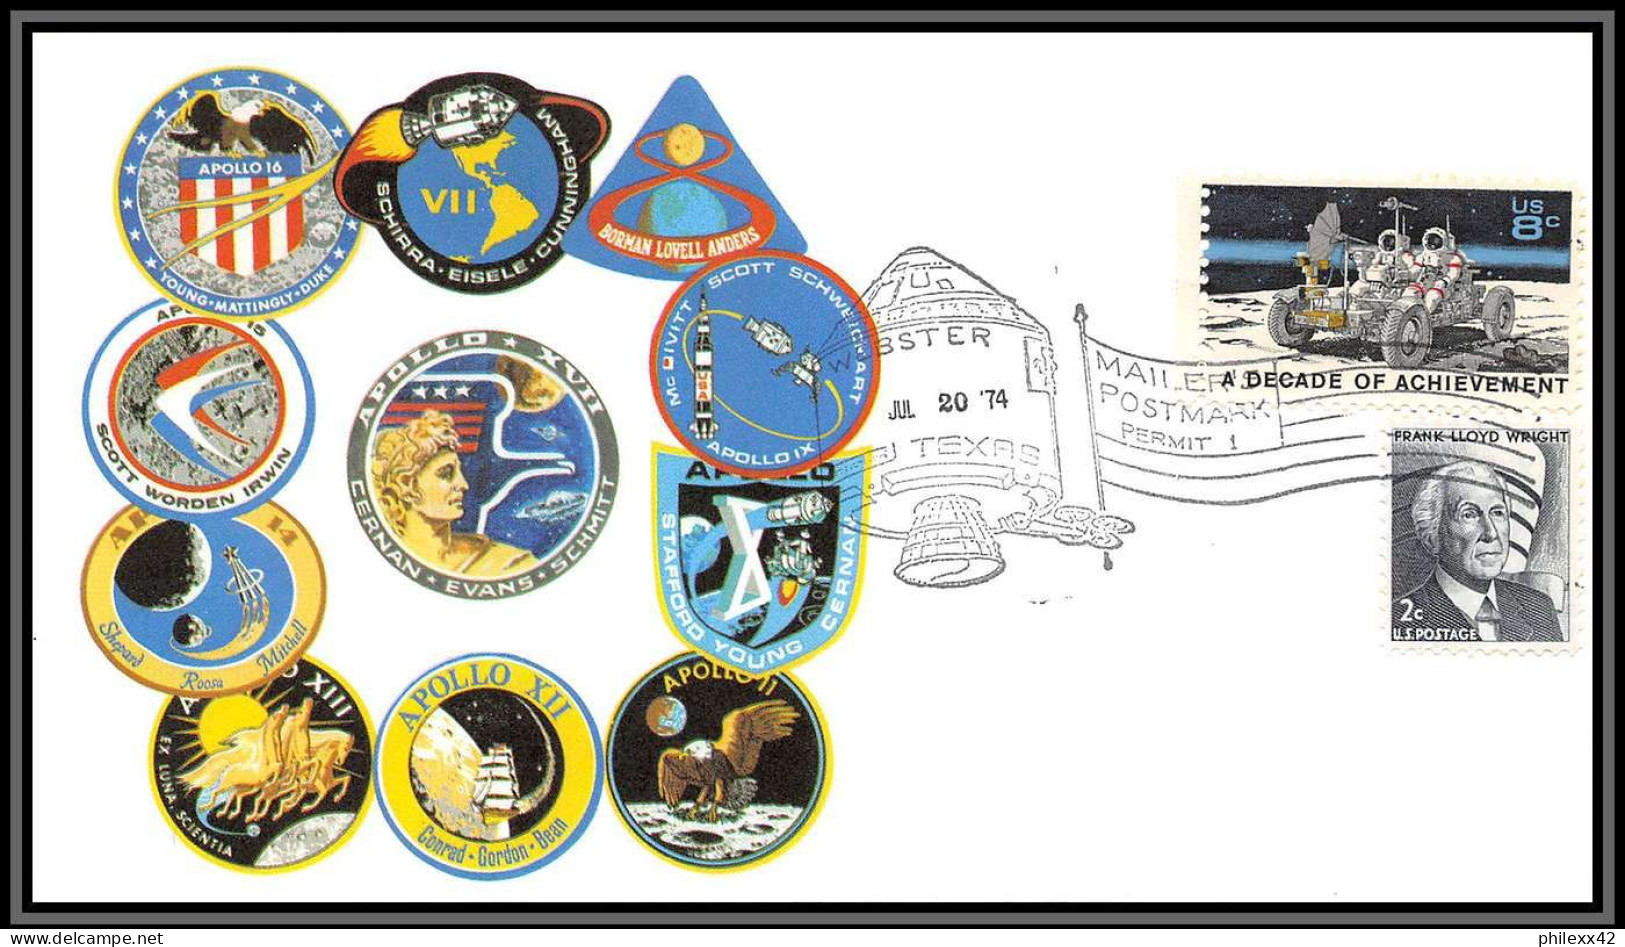 2424X Espace (space Raumfahrt) Stickers (autocollant) 30x22 Cm Usa Apollo Flight Decals Stickers 20/7/1974 - United States